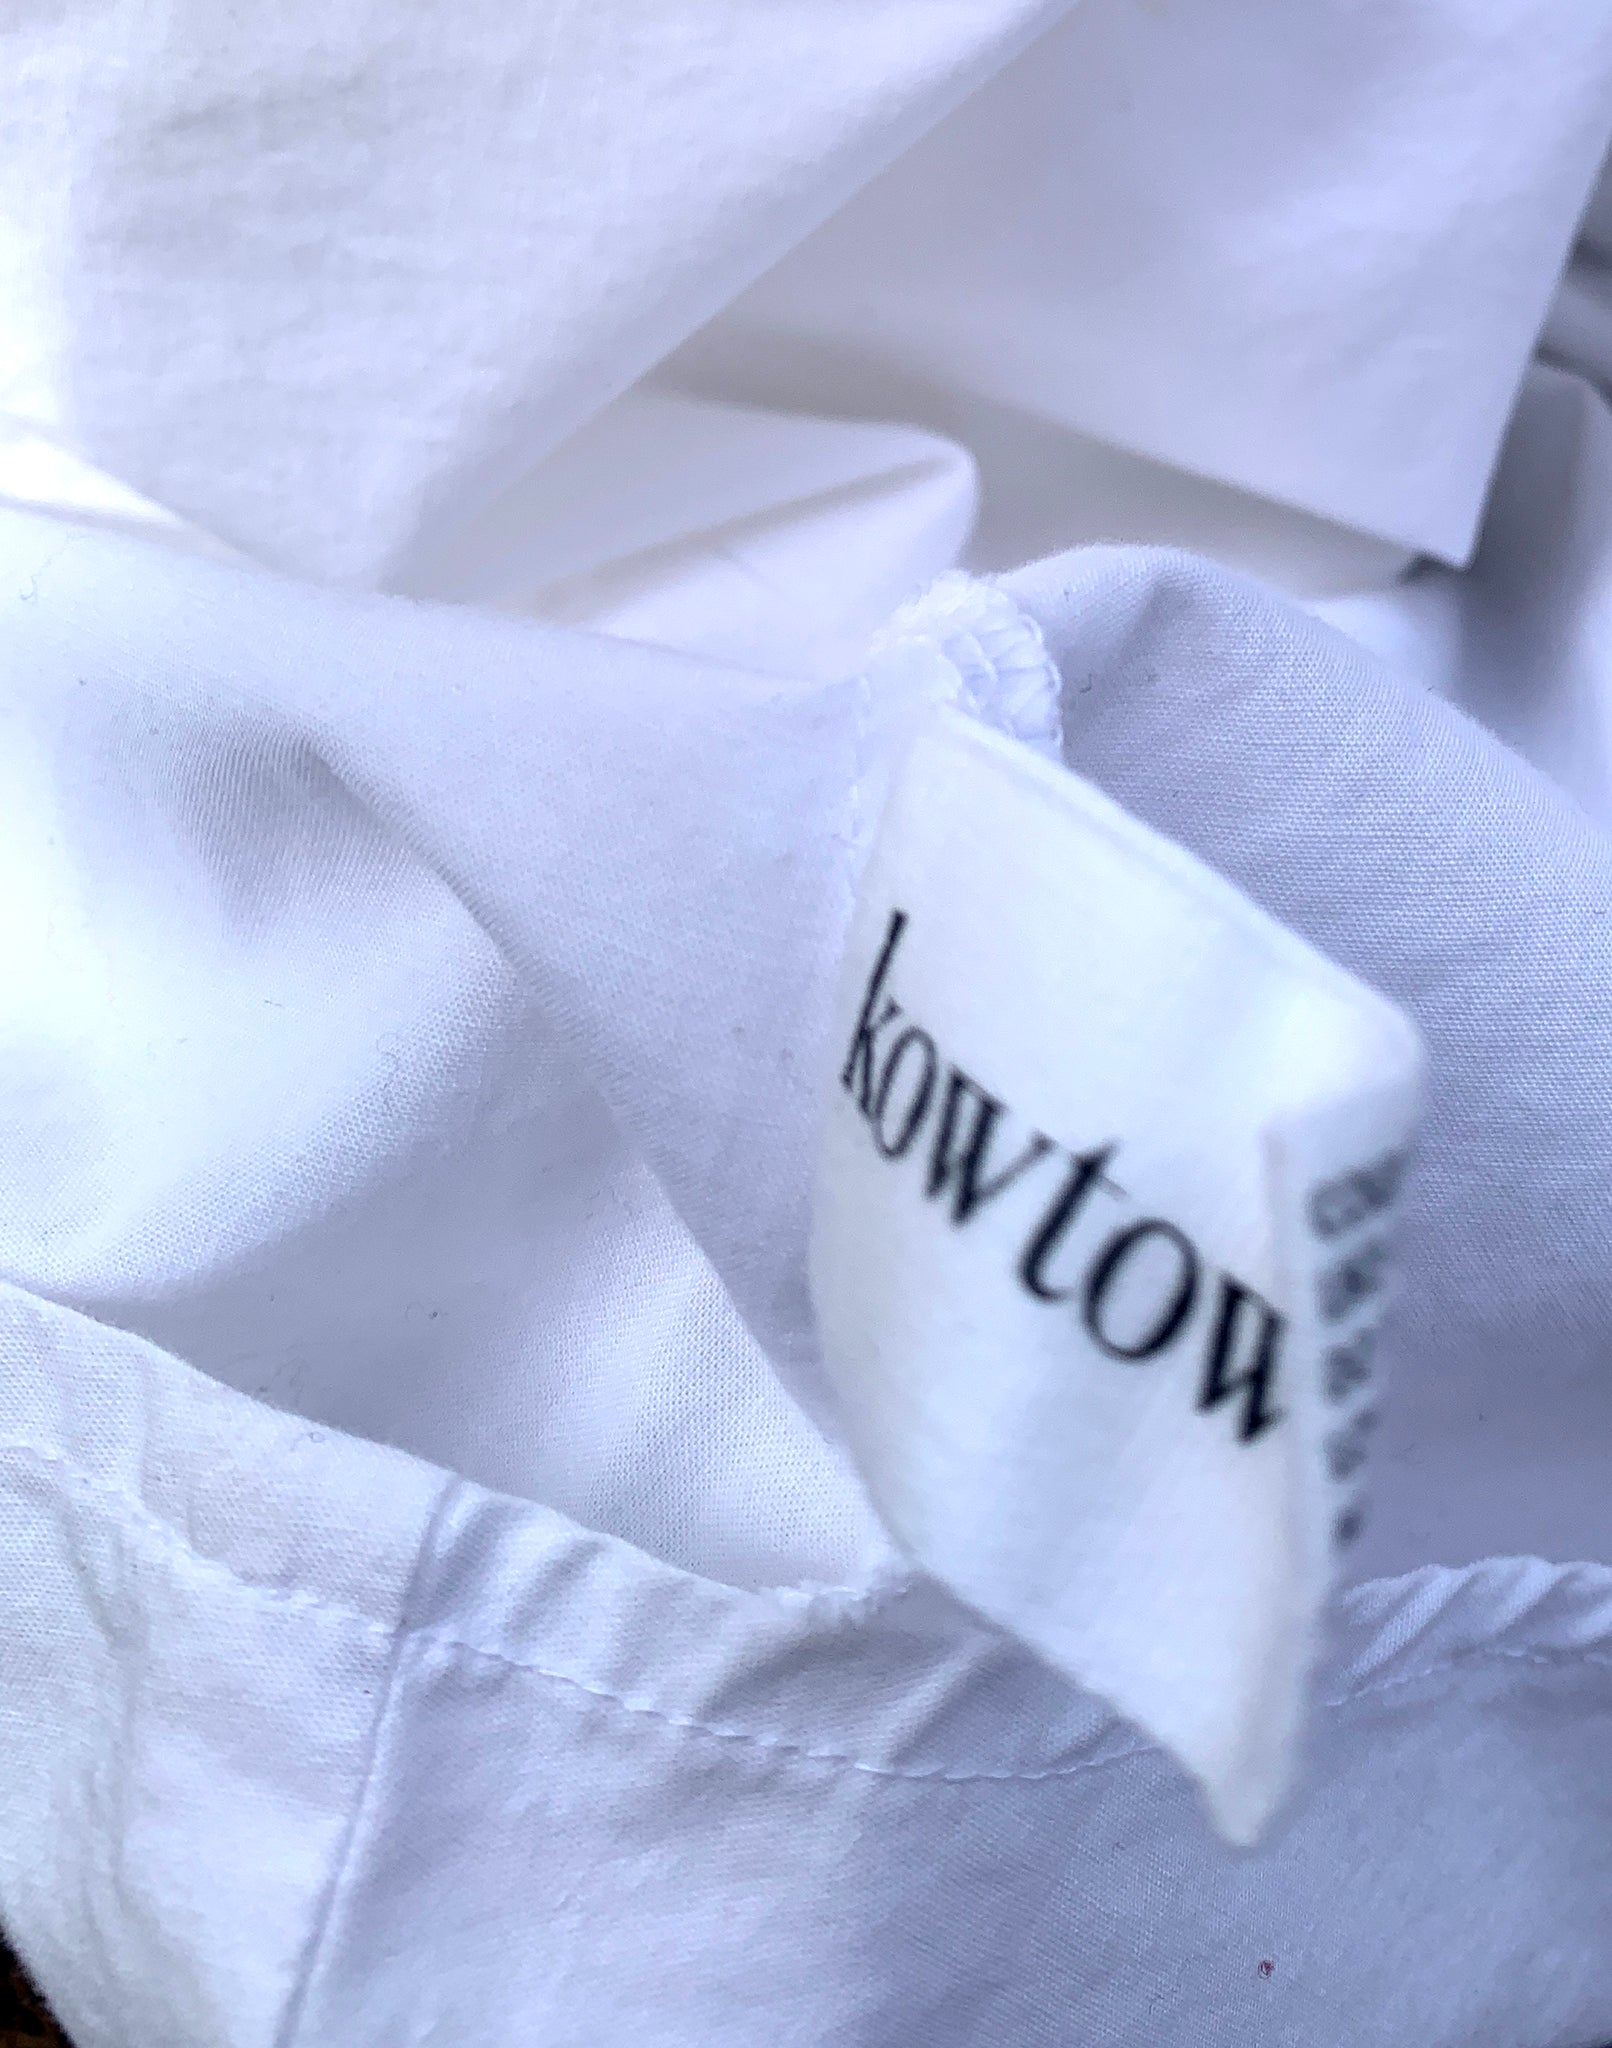 Kowtow White Cotton Sail Shirt - Size XS